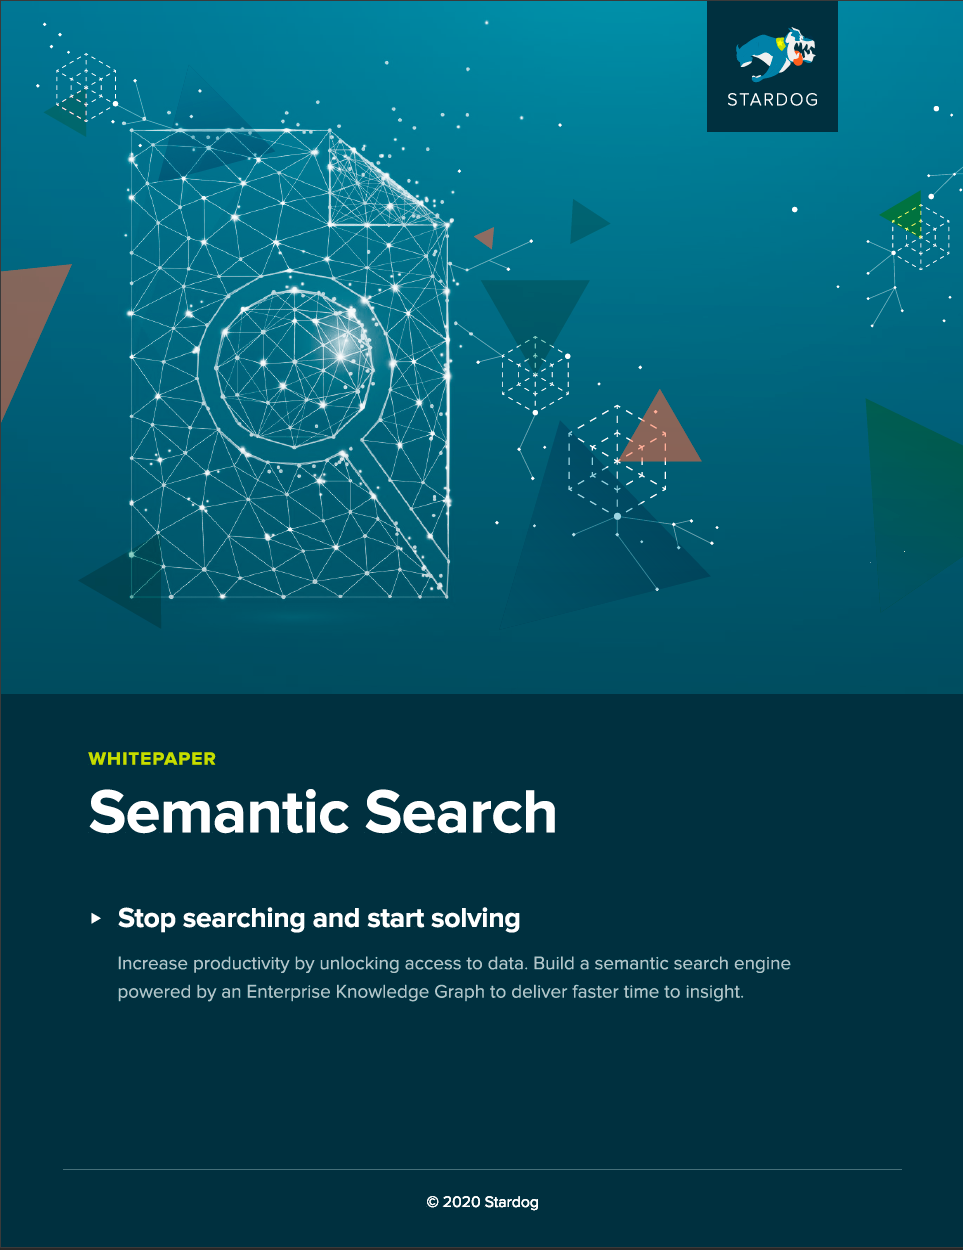 WP - Semantic Search